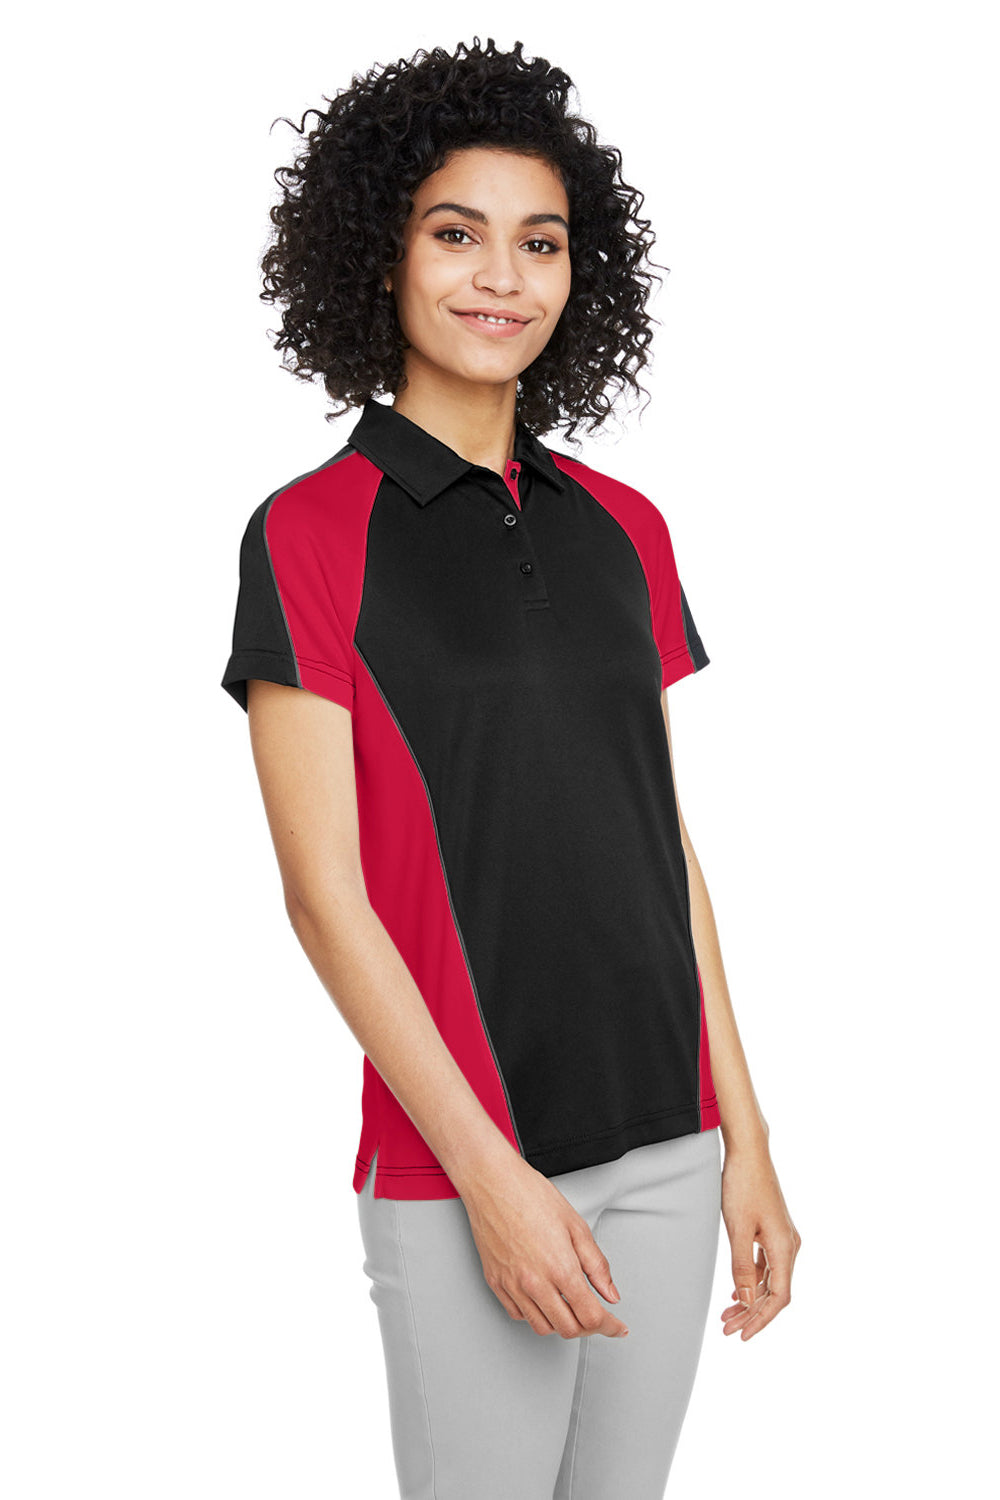 Harriton M385W Womens Advantage Performance Moisture Wicking Colorblock Short Sleeve Polo Shirt Black/Red 3Q